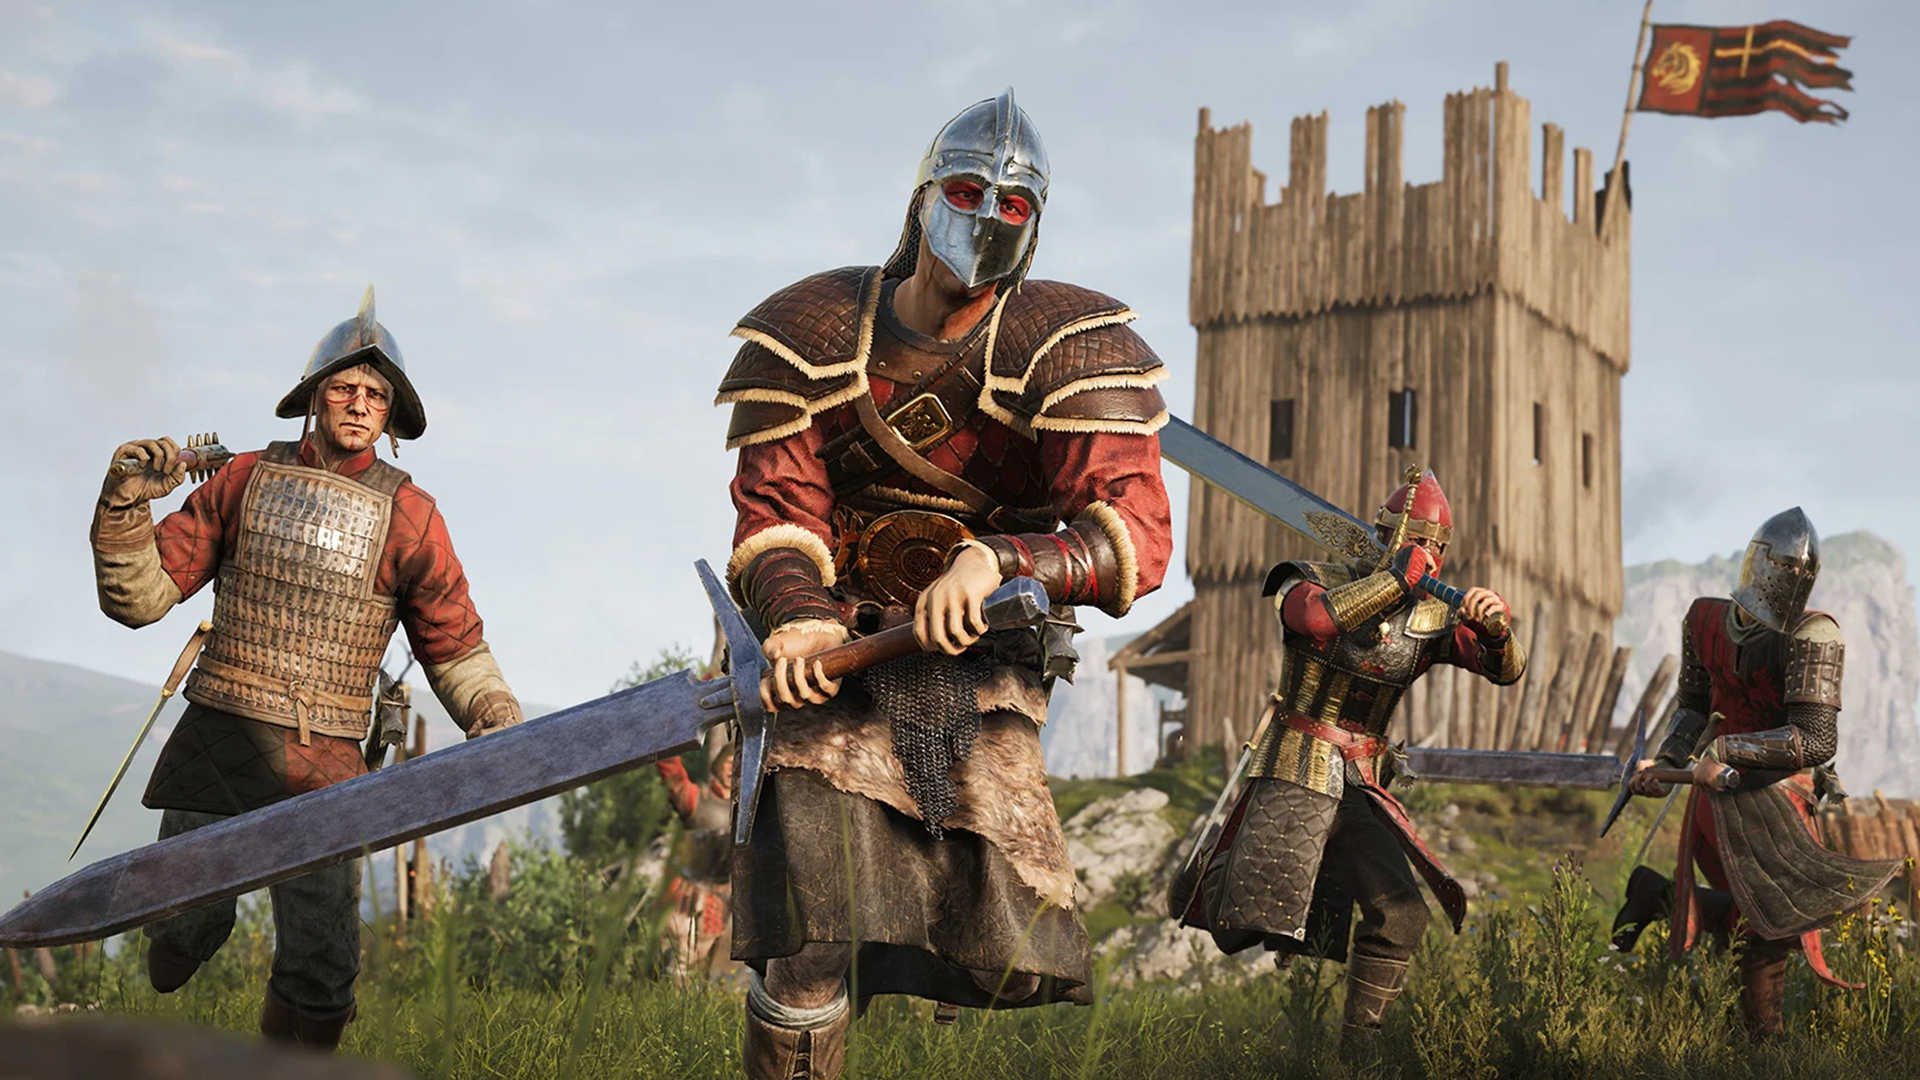 Brutal medieval game, beloved on Steam, is now completely free